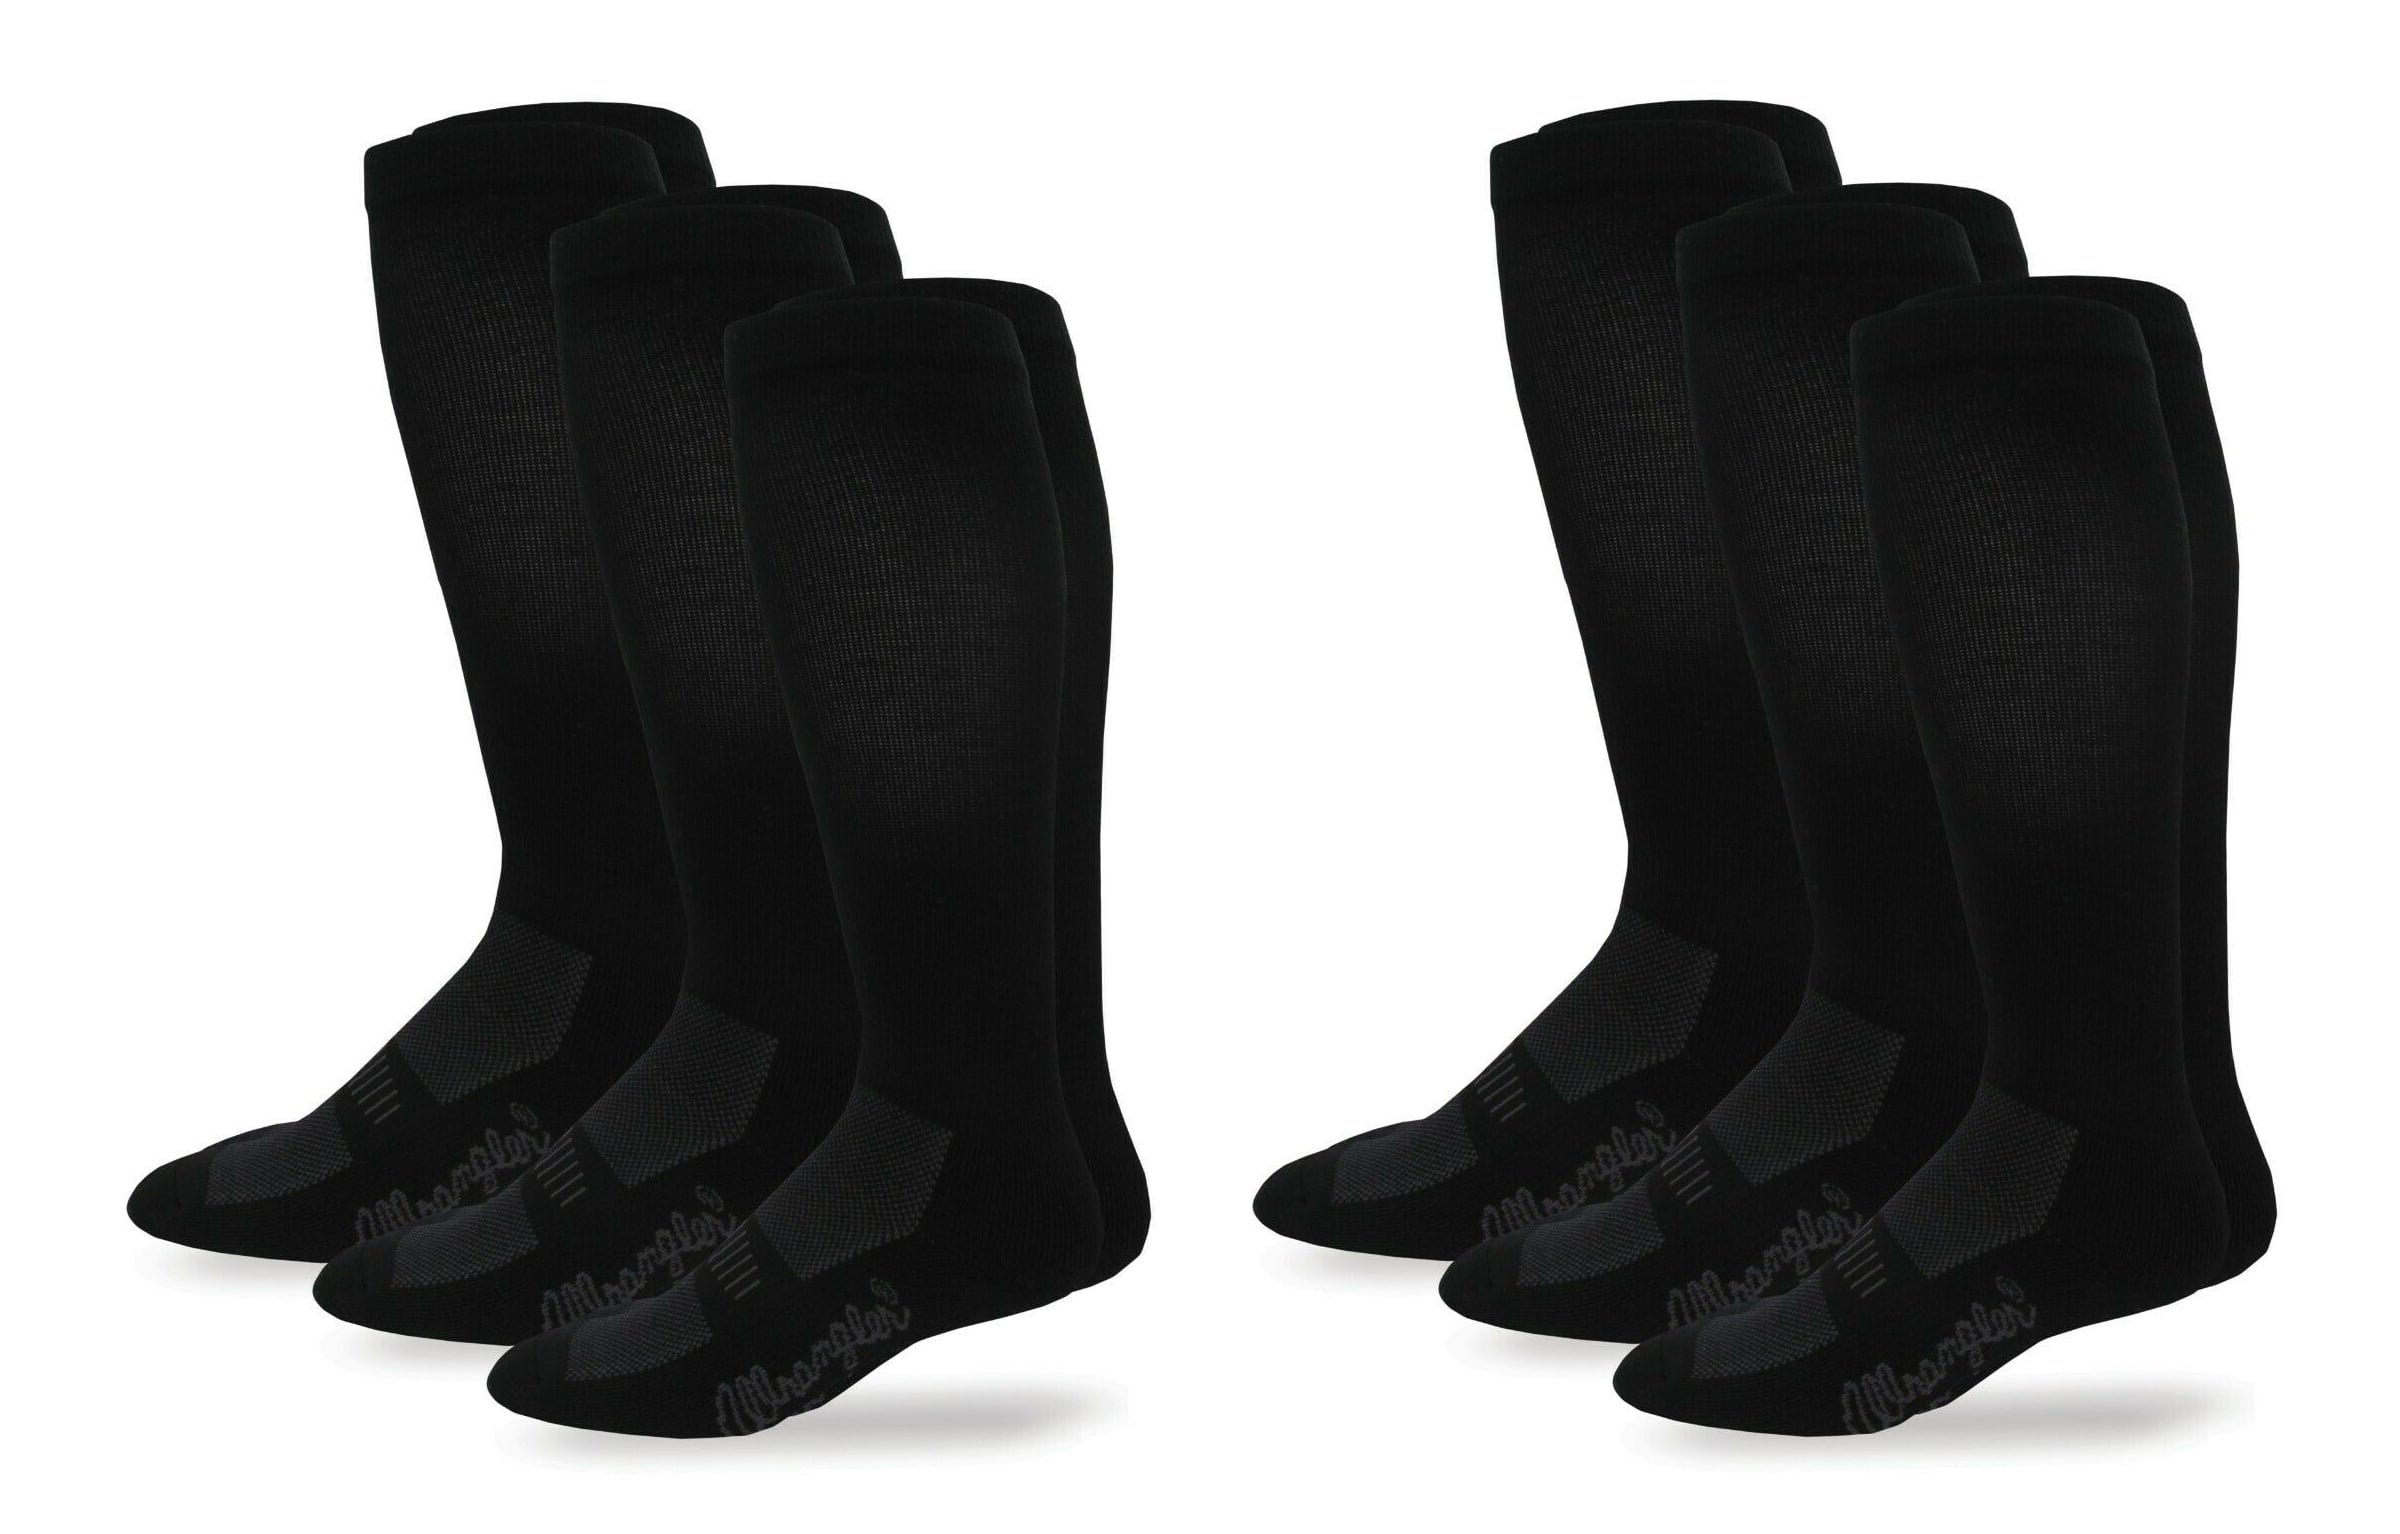 Men's Western Boot Cushion Over the Calf Socks 6 Pack Socks - Walmart.com